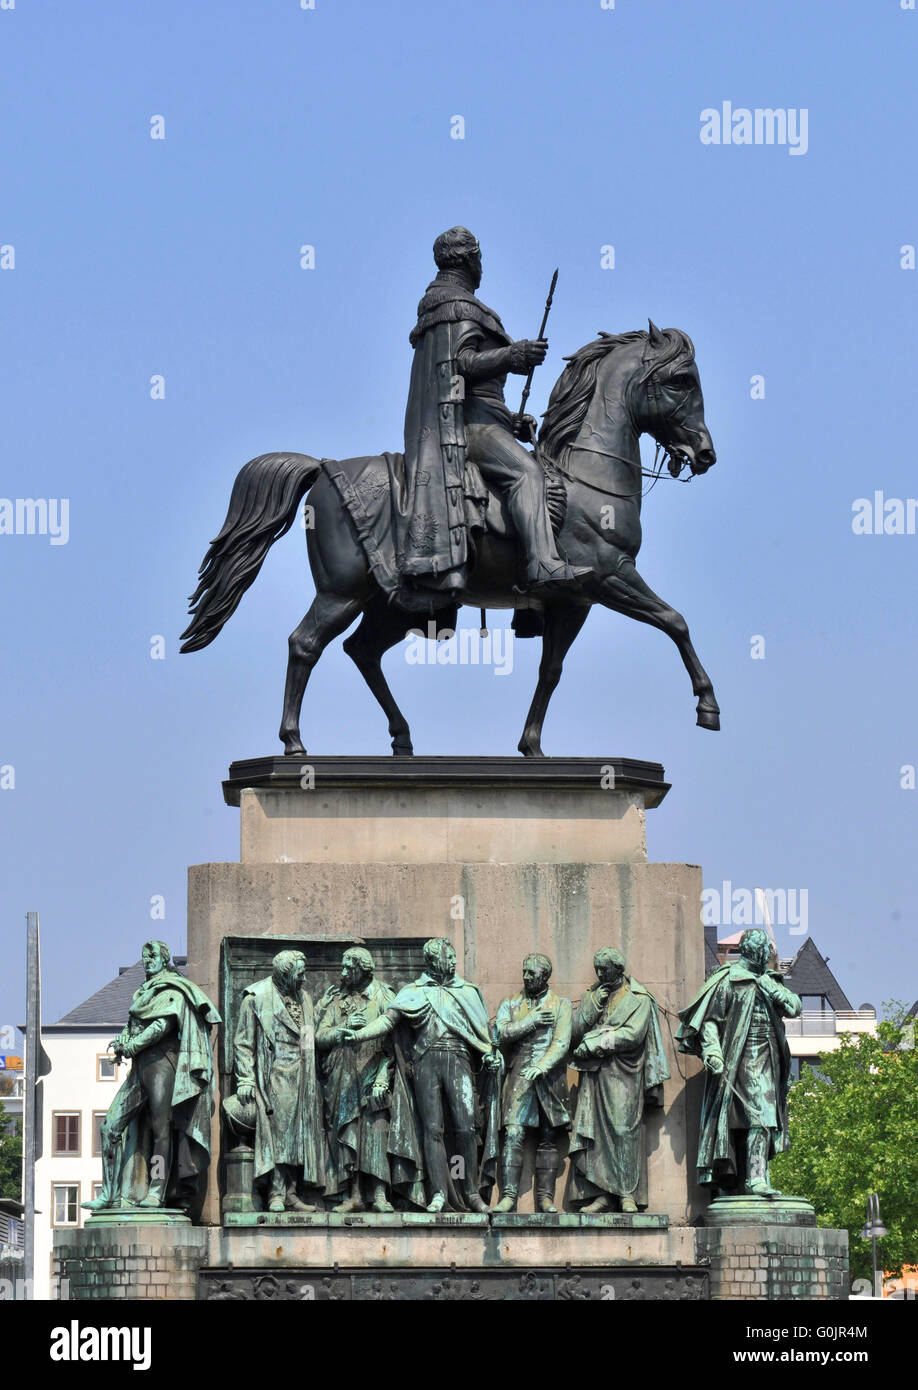 Equestrian monument of Frederick William III of Prussia, equestrian statue, Heumarkt, Cologne, North Rhine-Westphalia, Germany / Köln Stock Photo